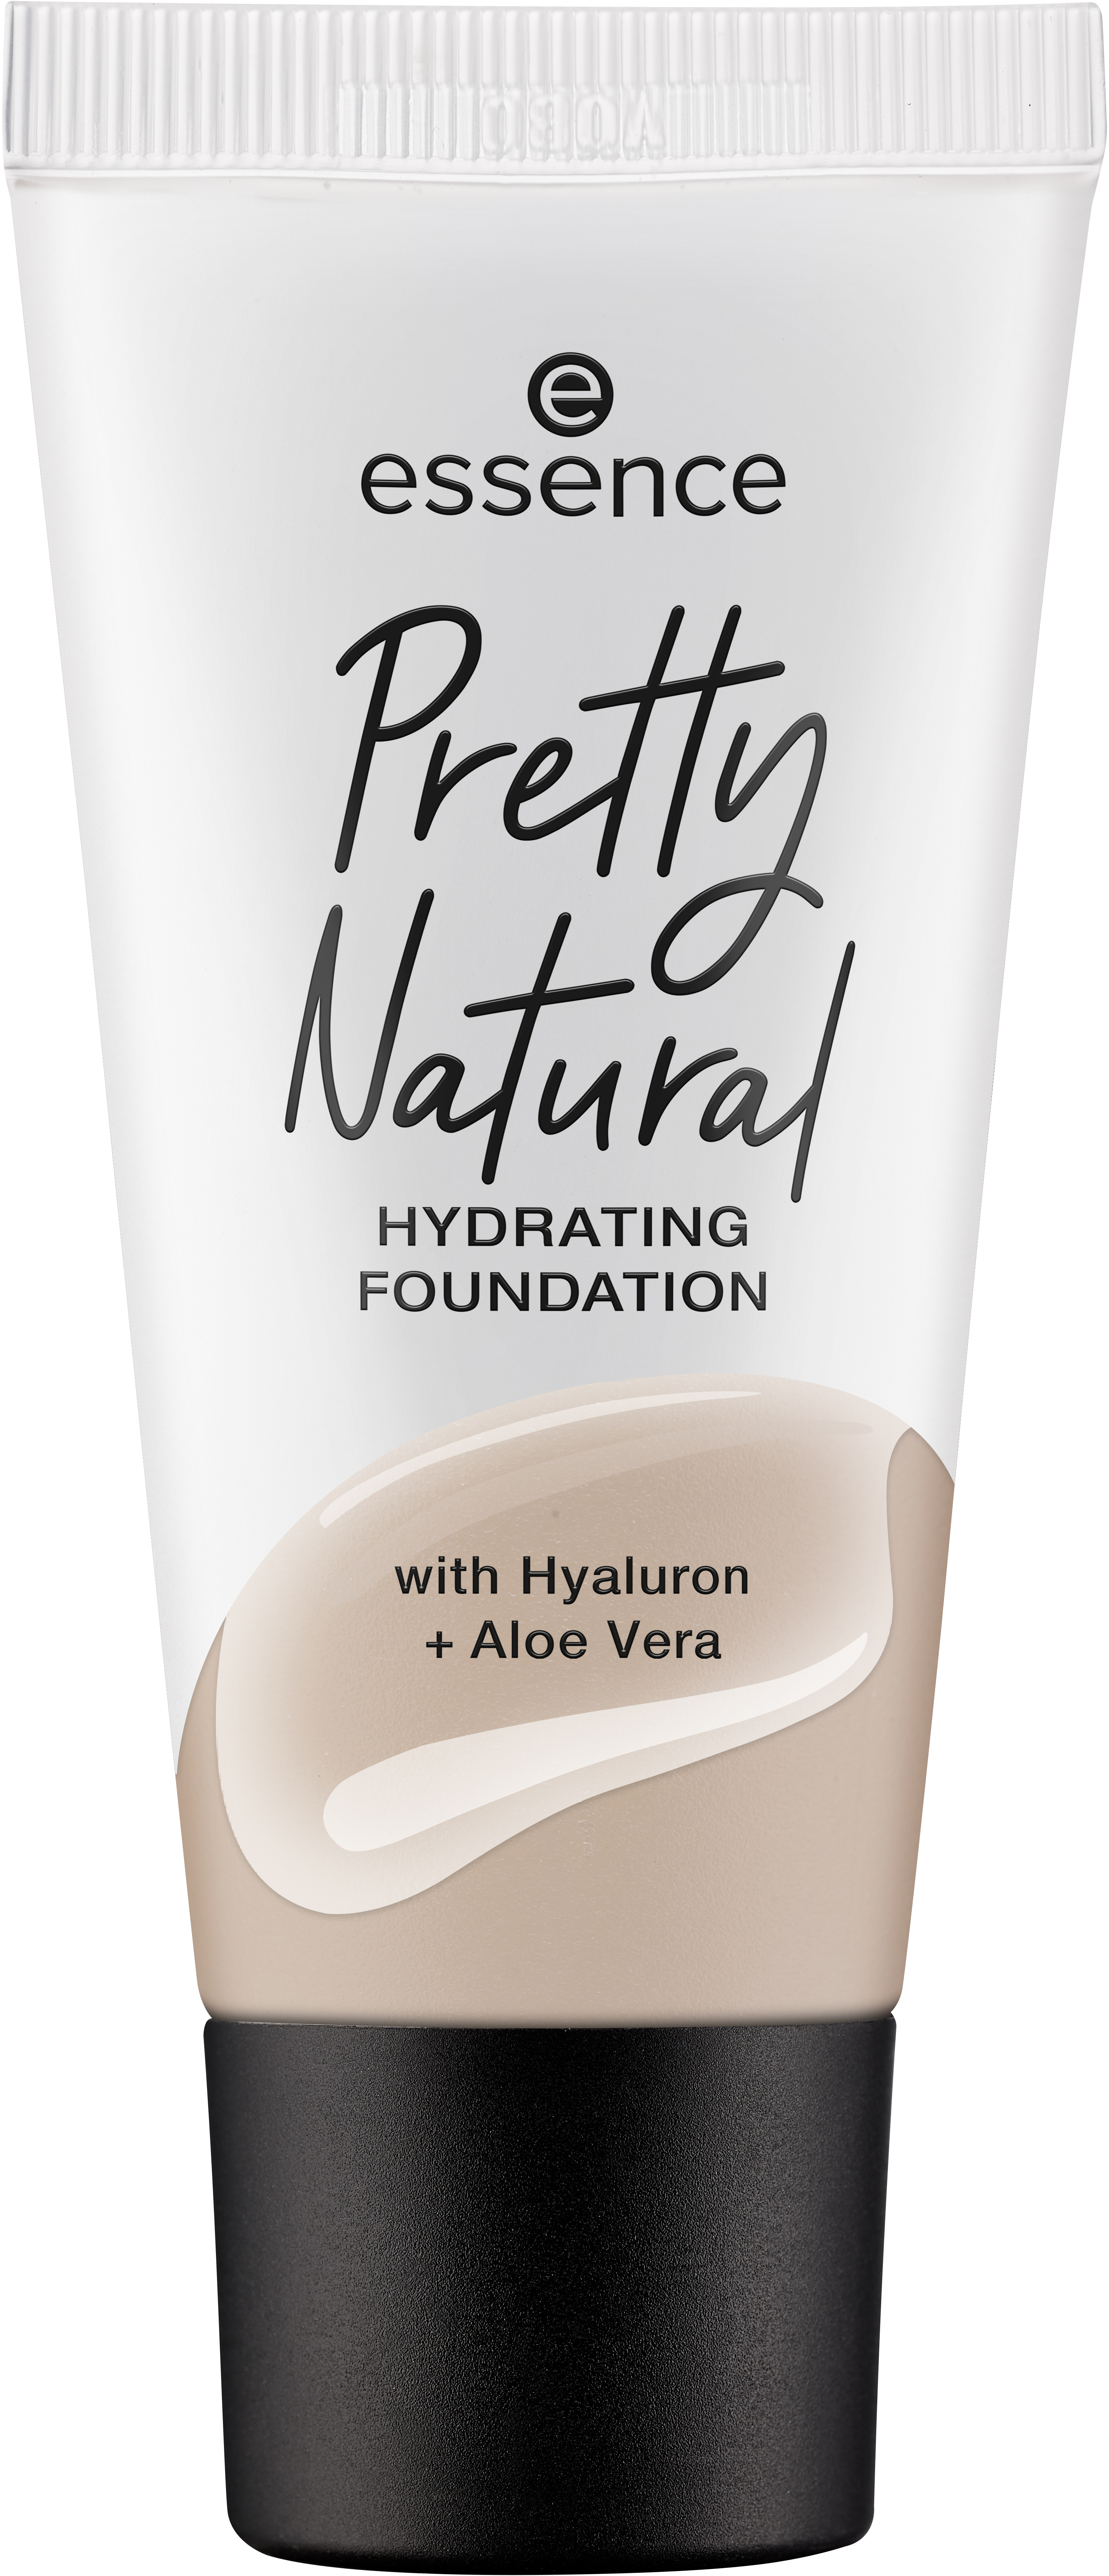 70 hydrating pretty natural essence foundation